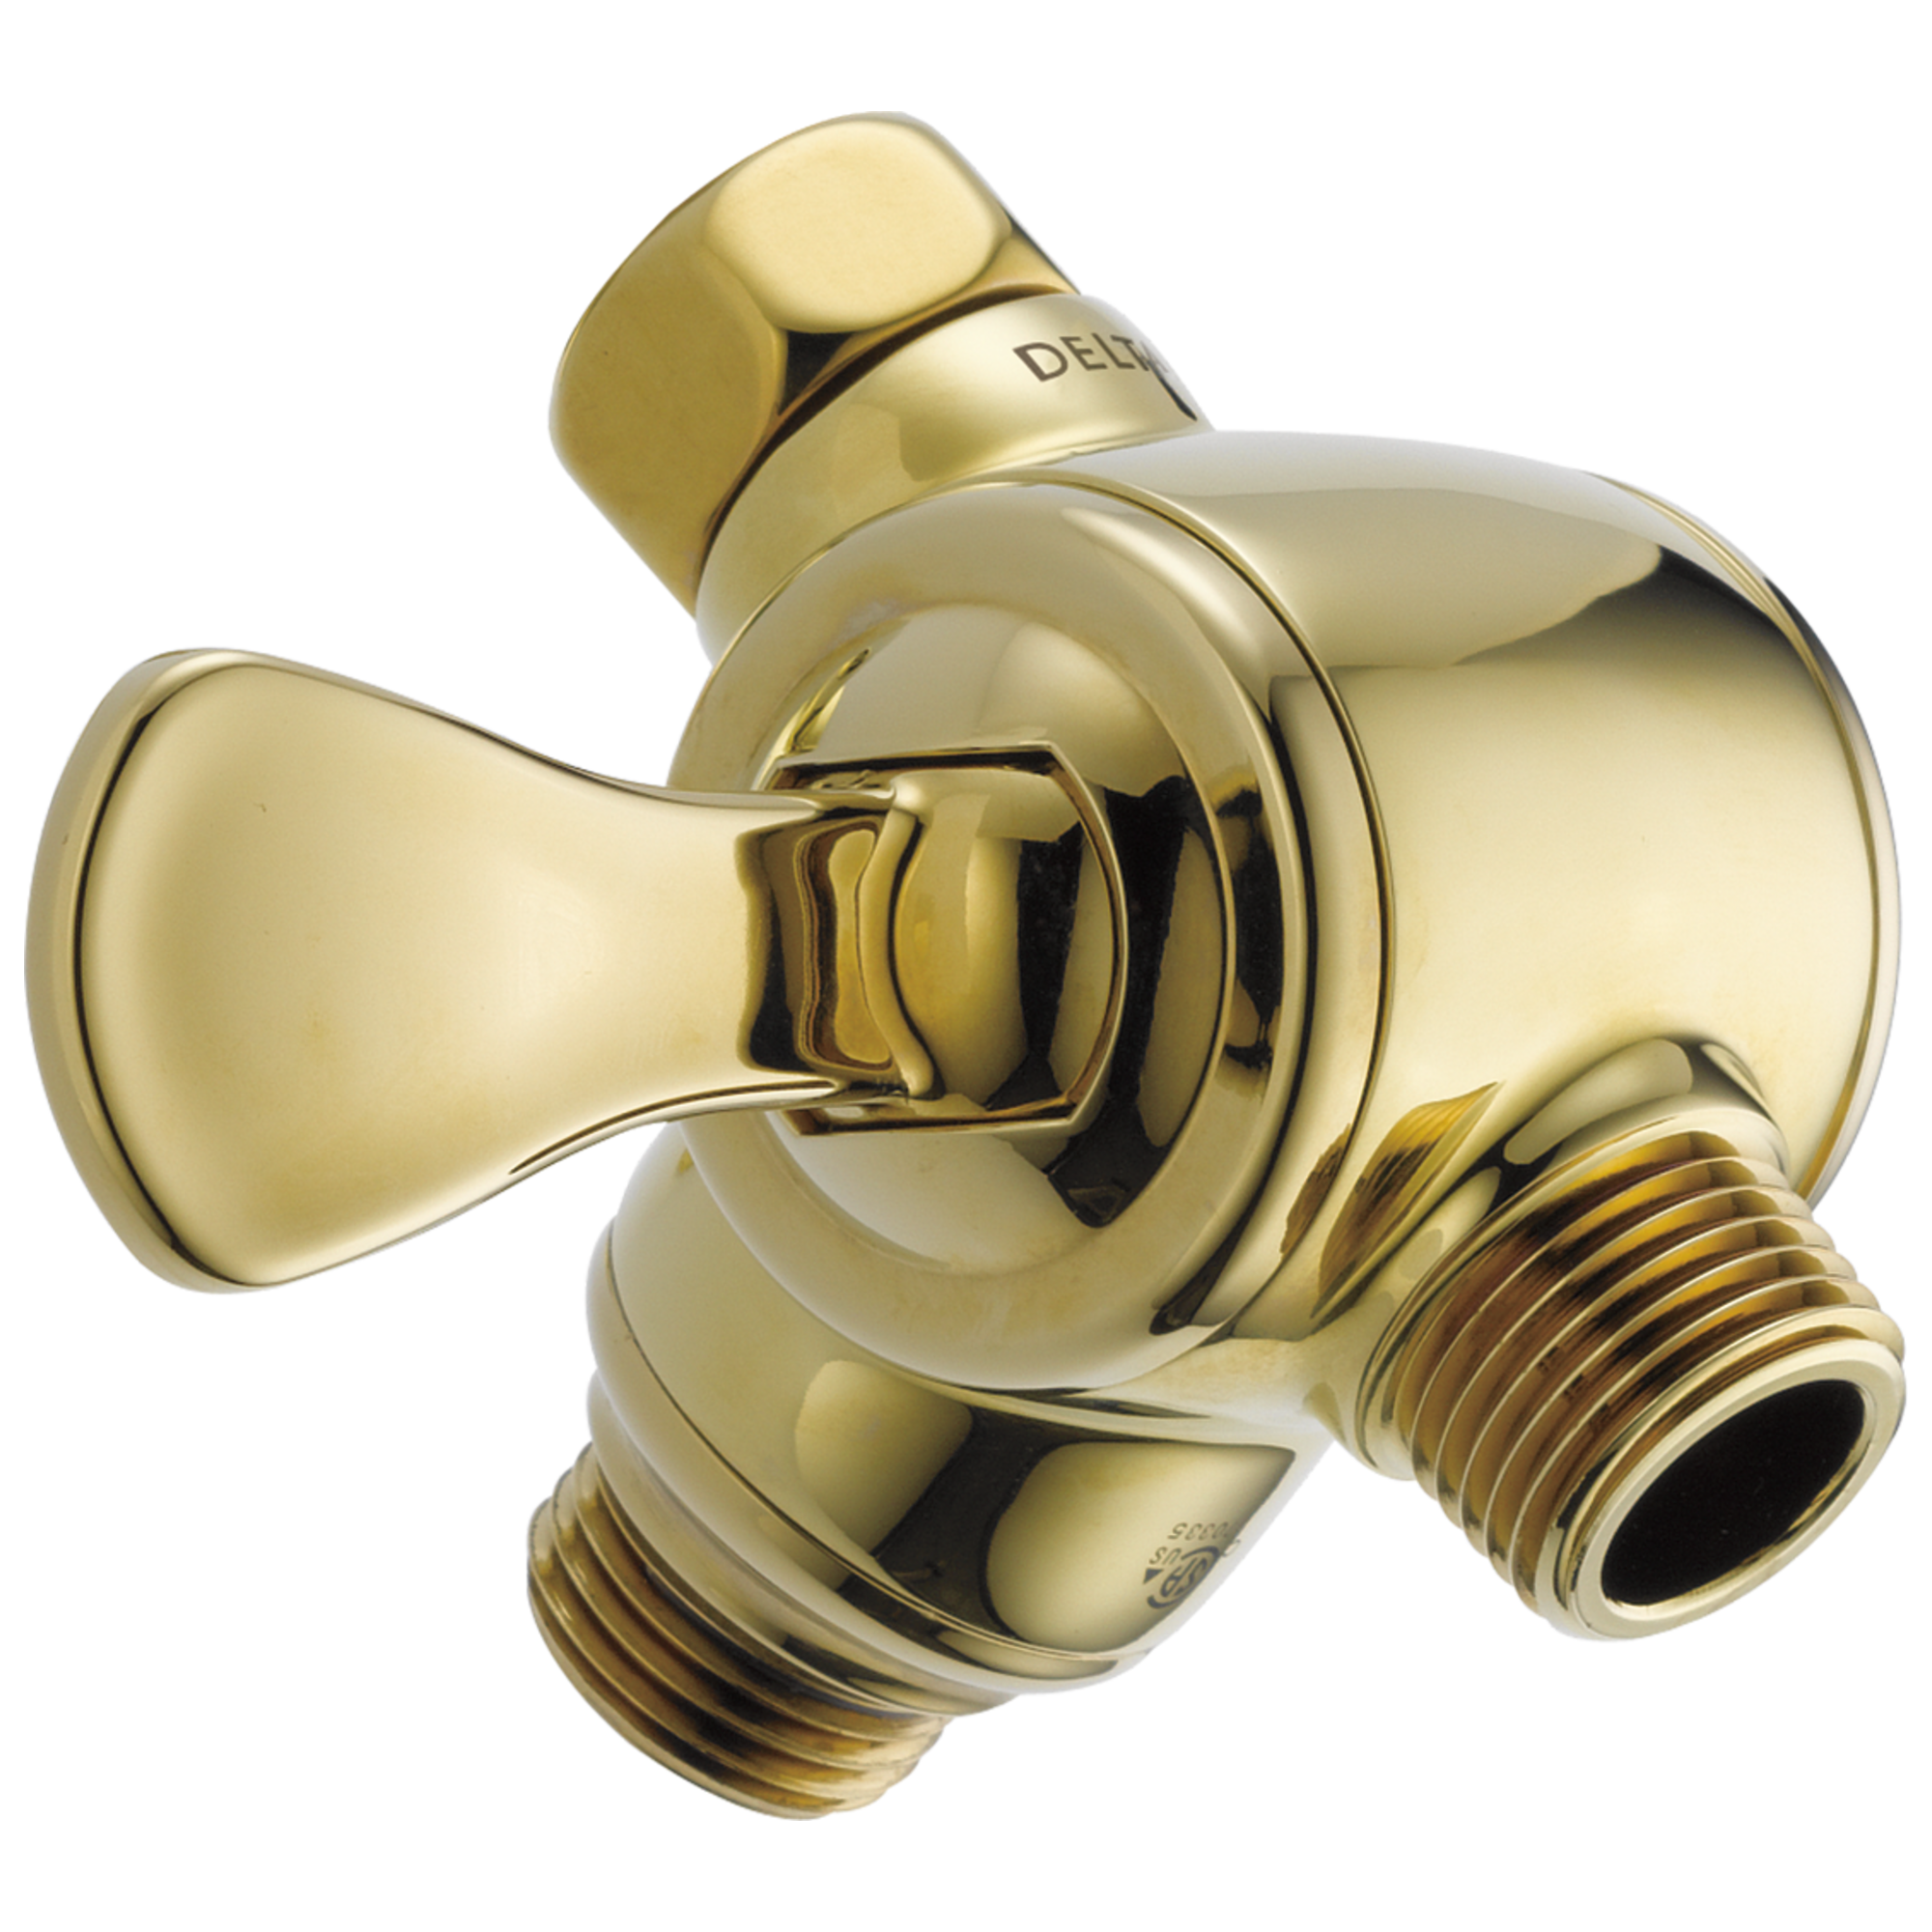 Delta Universal Showering Components: 3-Way Shower Arm Diverter for Hand Shower